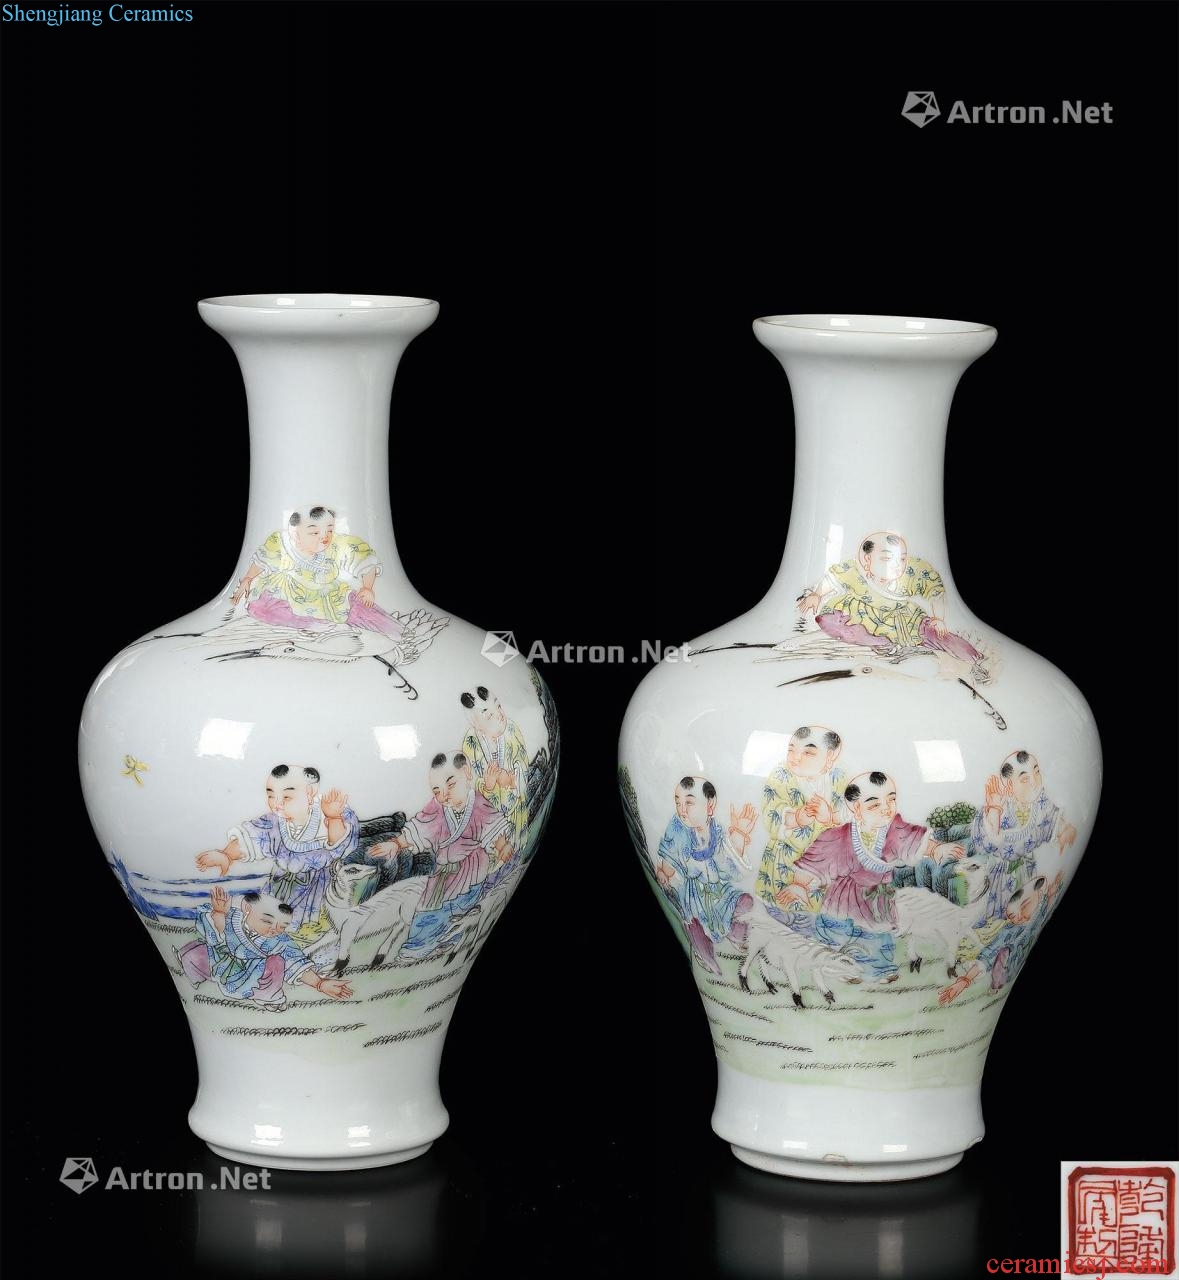 (a) powder enamel baby play figure in the qing dynasty vase